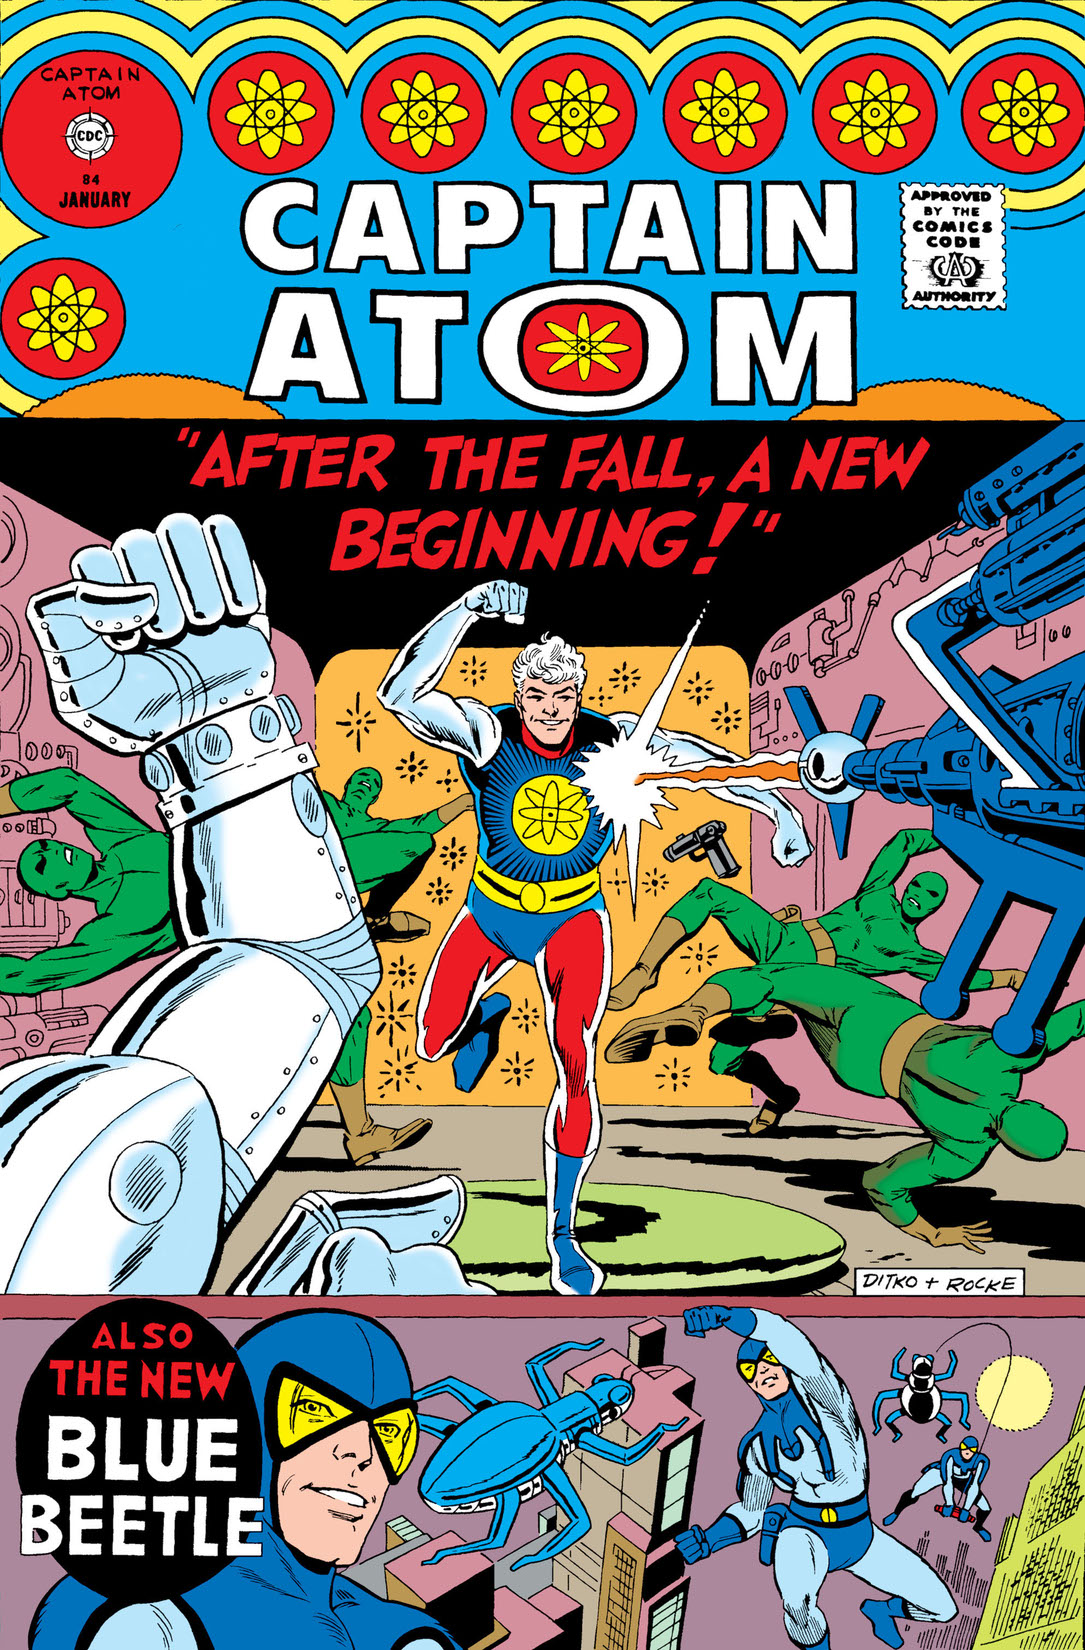 Captain Atom (1965-) #84 preview images